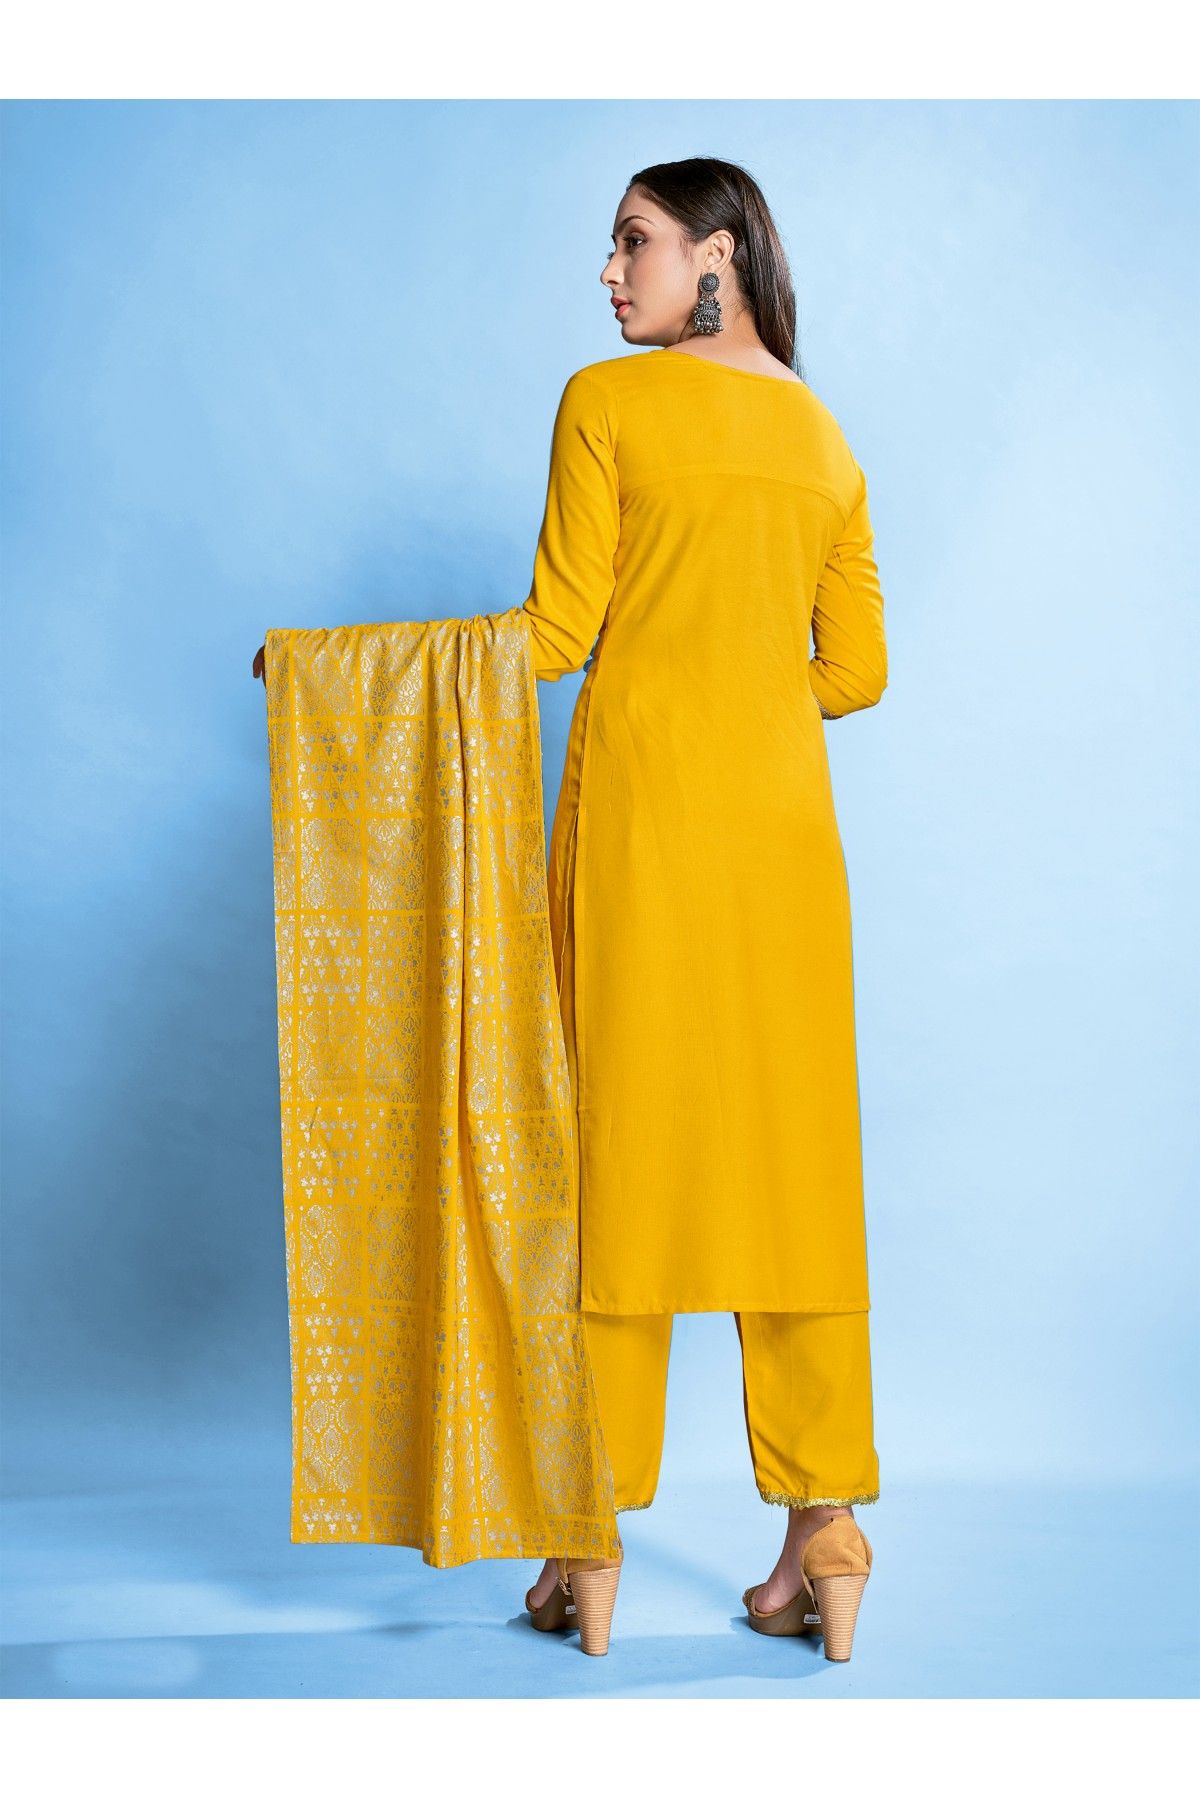 Salwar Kameez Straight Kurta Palazzo pant Suit Female Attires Dress New  Clothing | eBay